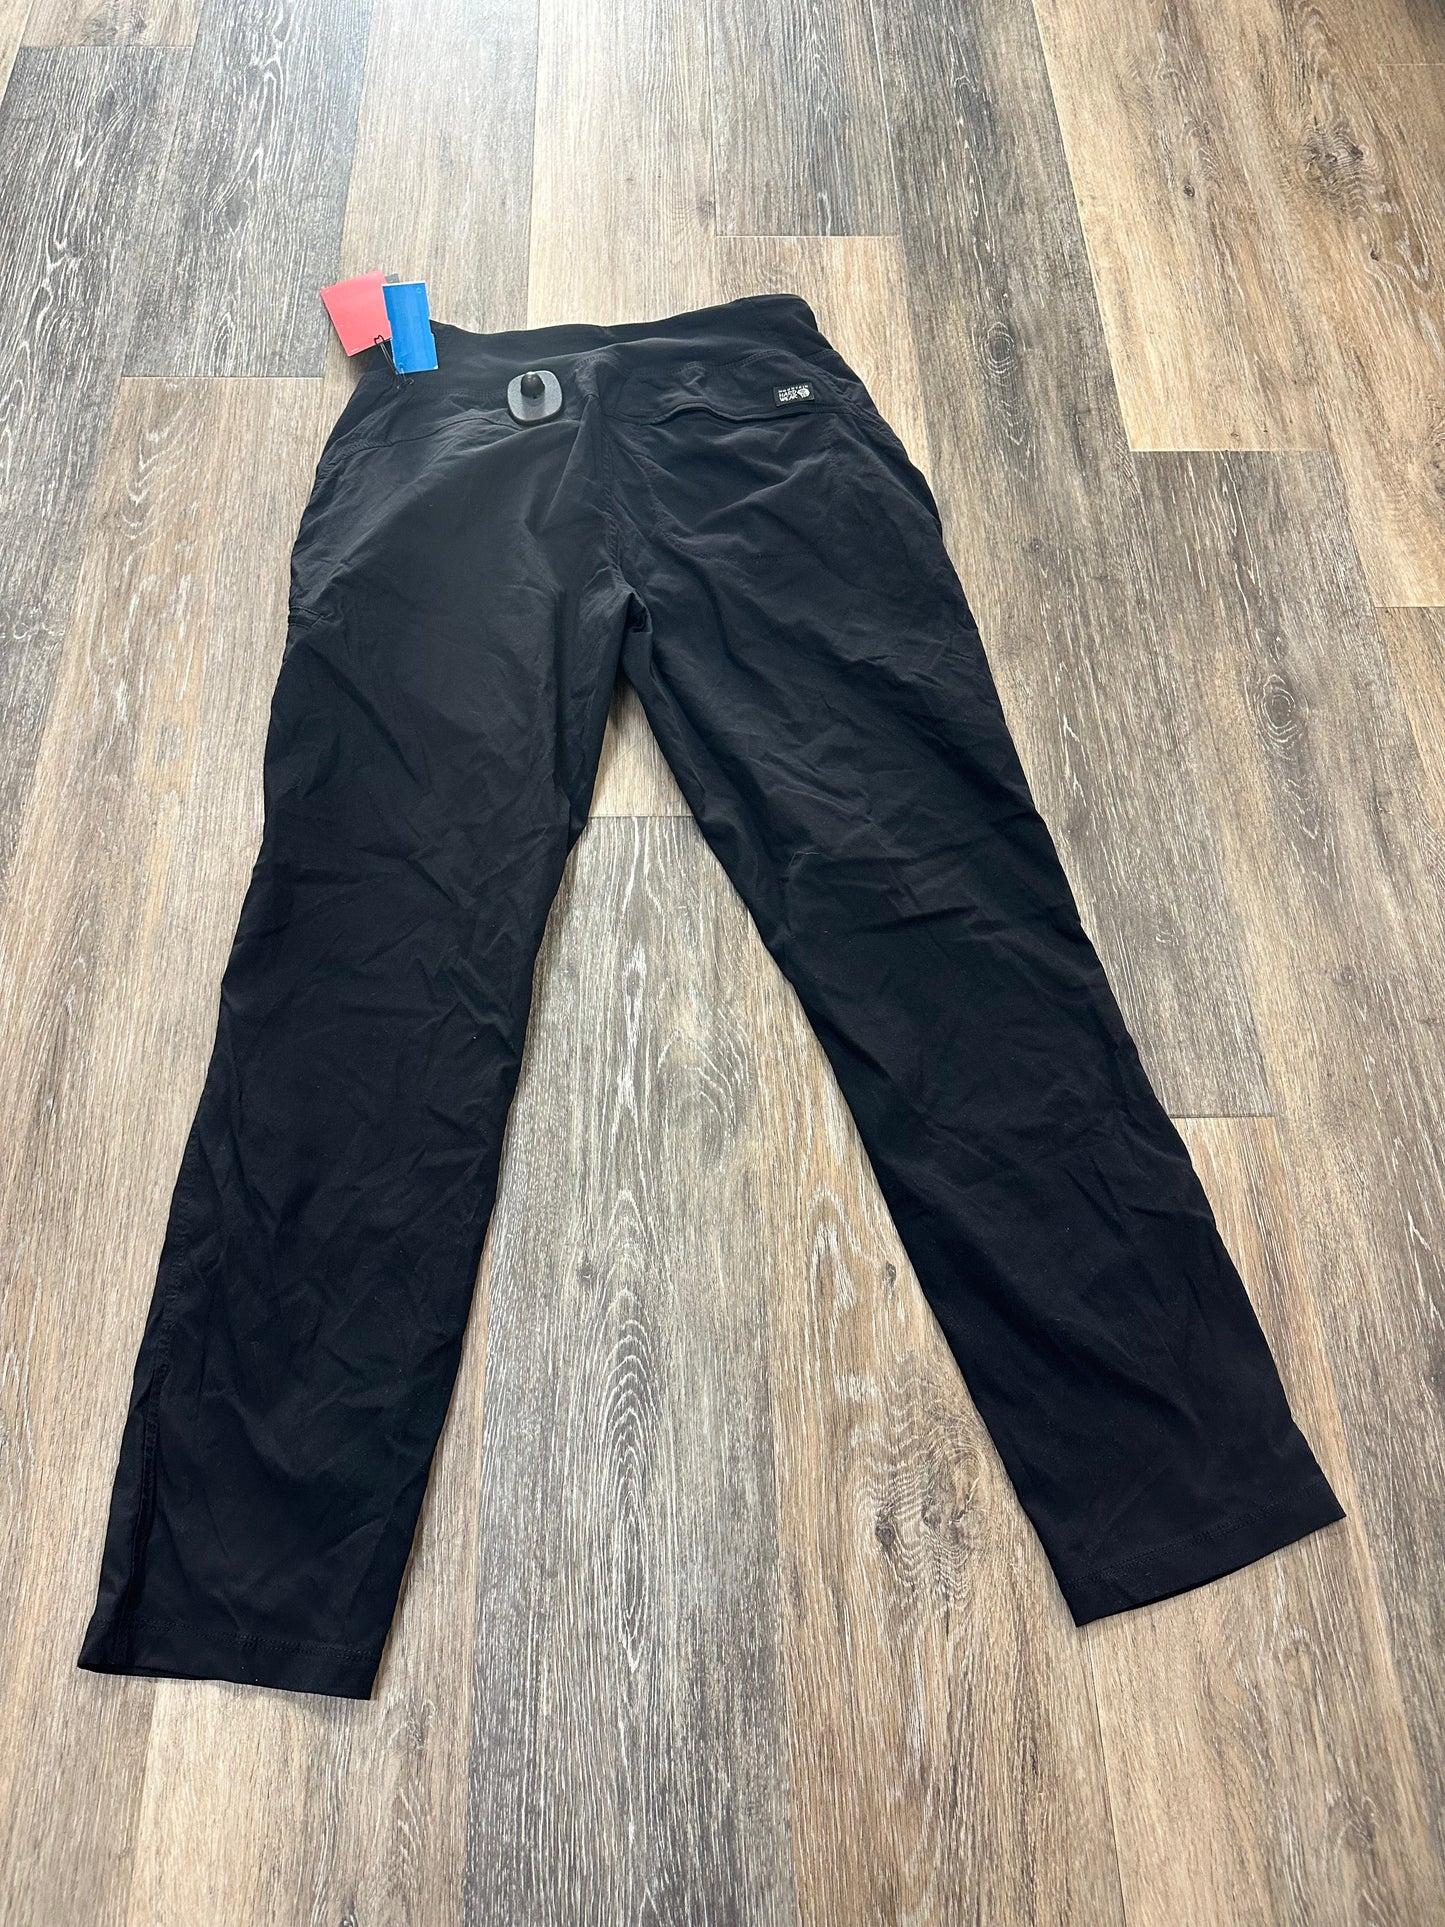 Black Athletic Pants Mountain Hardwear, Size S